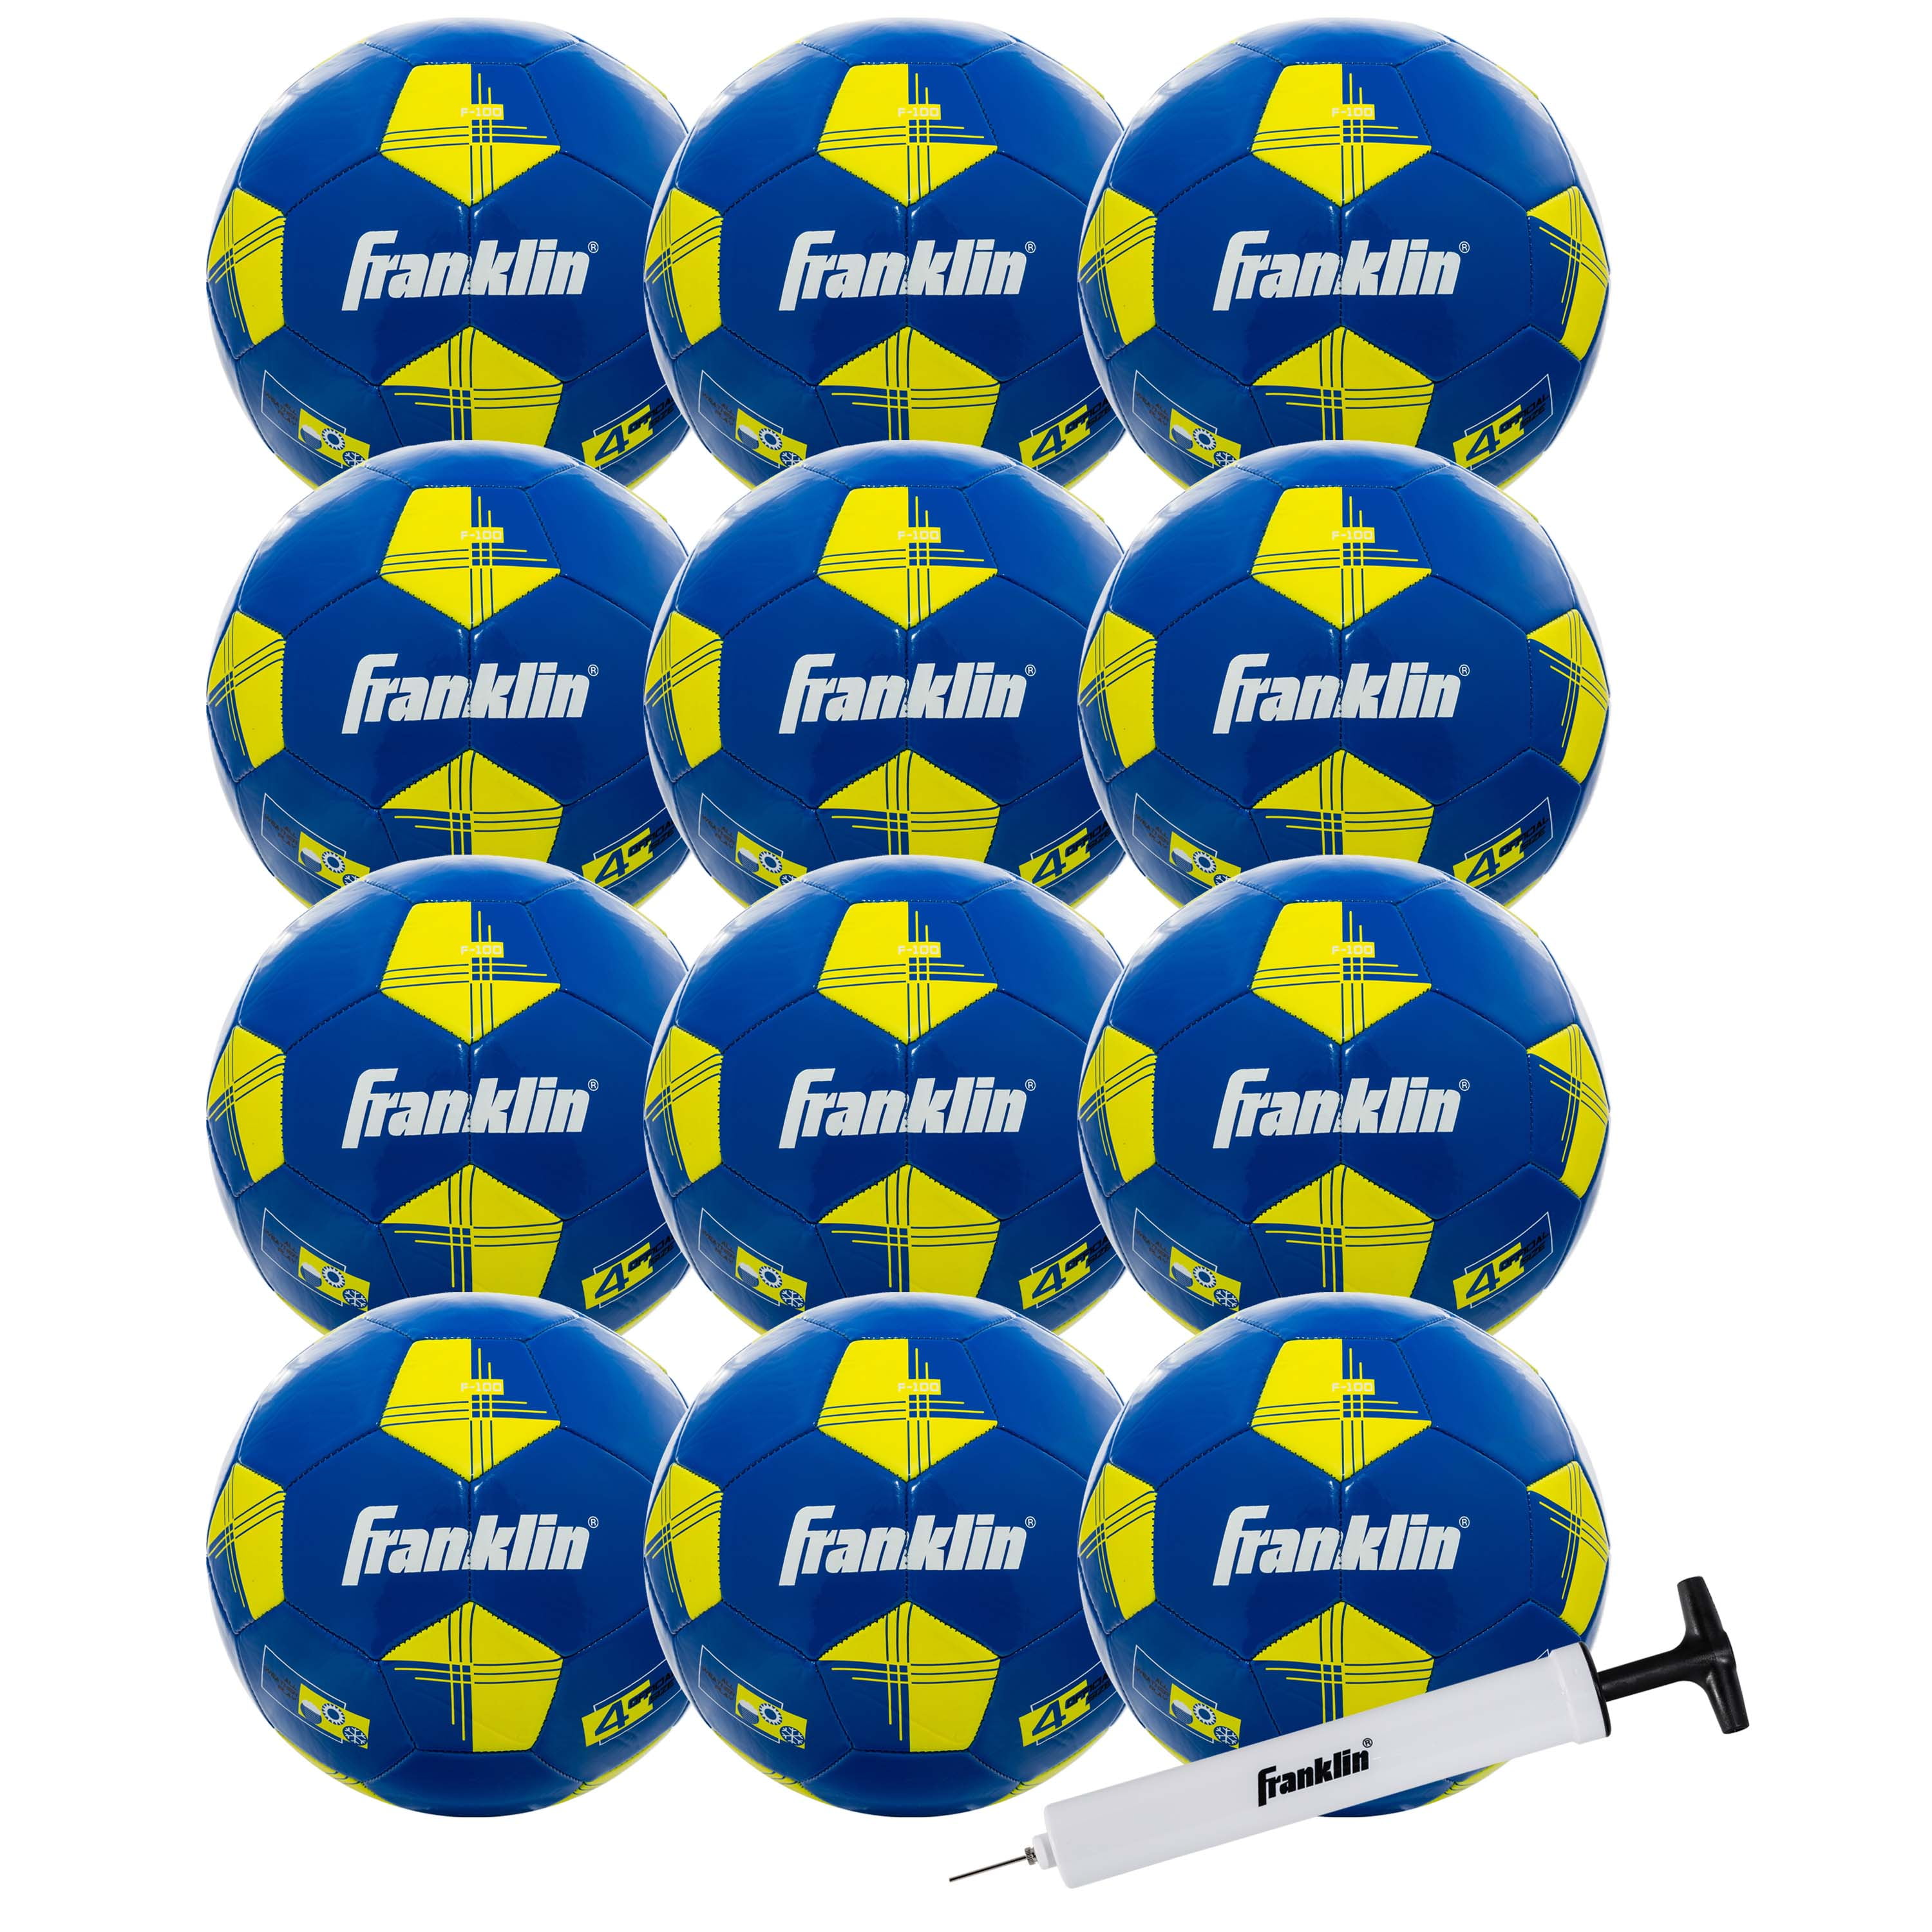 Franklin Sports Soccer Balls + Pump Set - (12) Size 4 Balls - Blue/Yellow